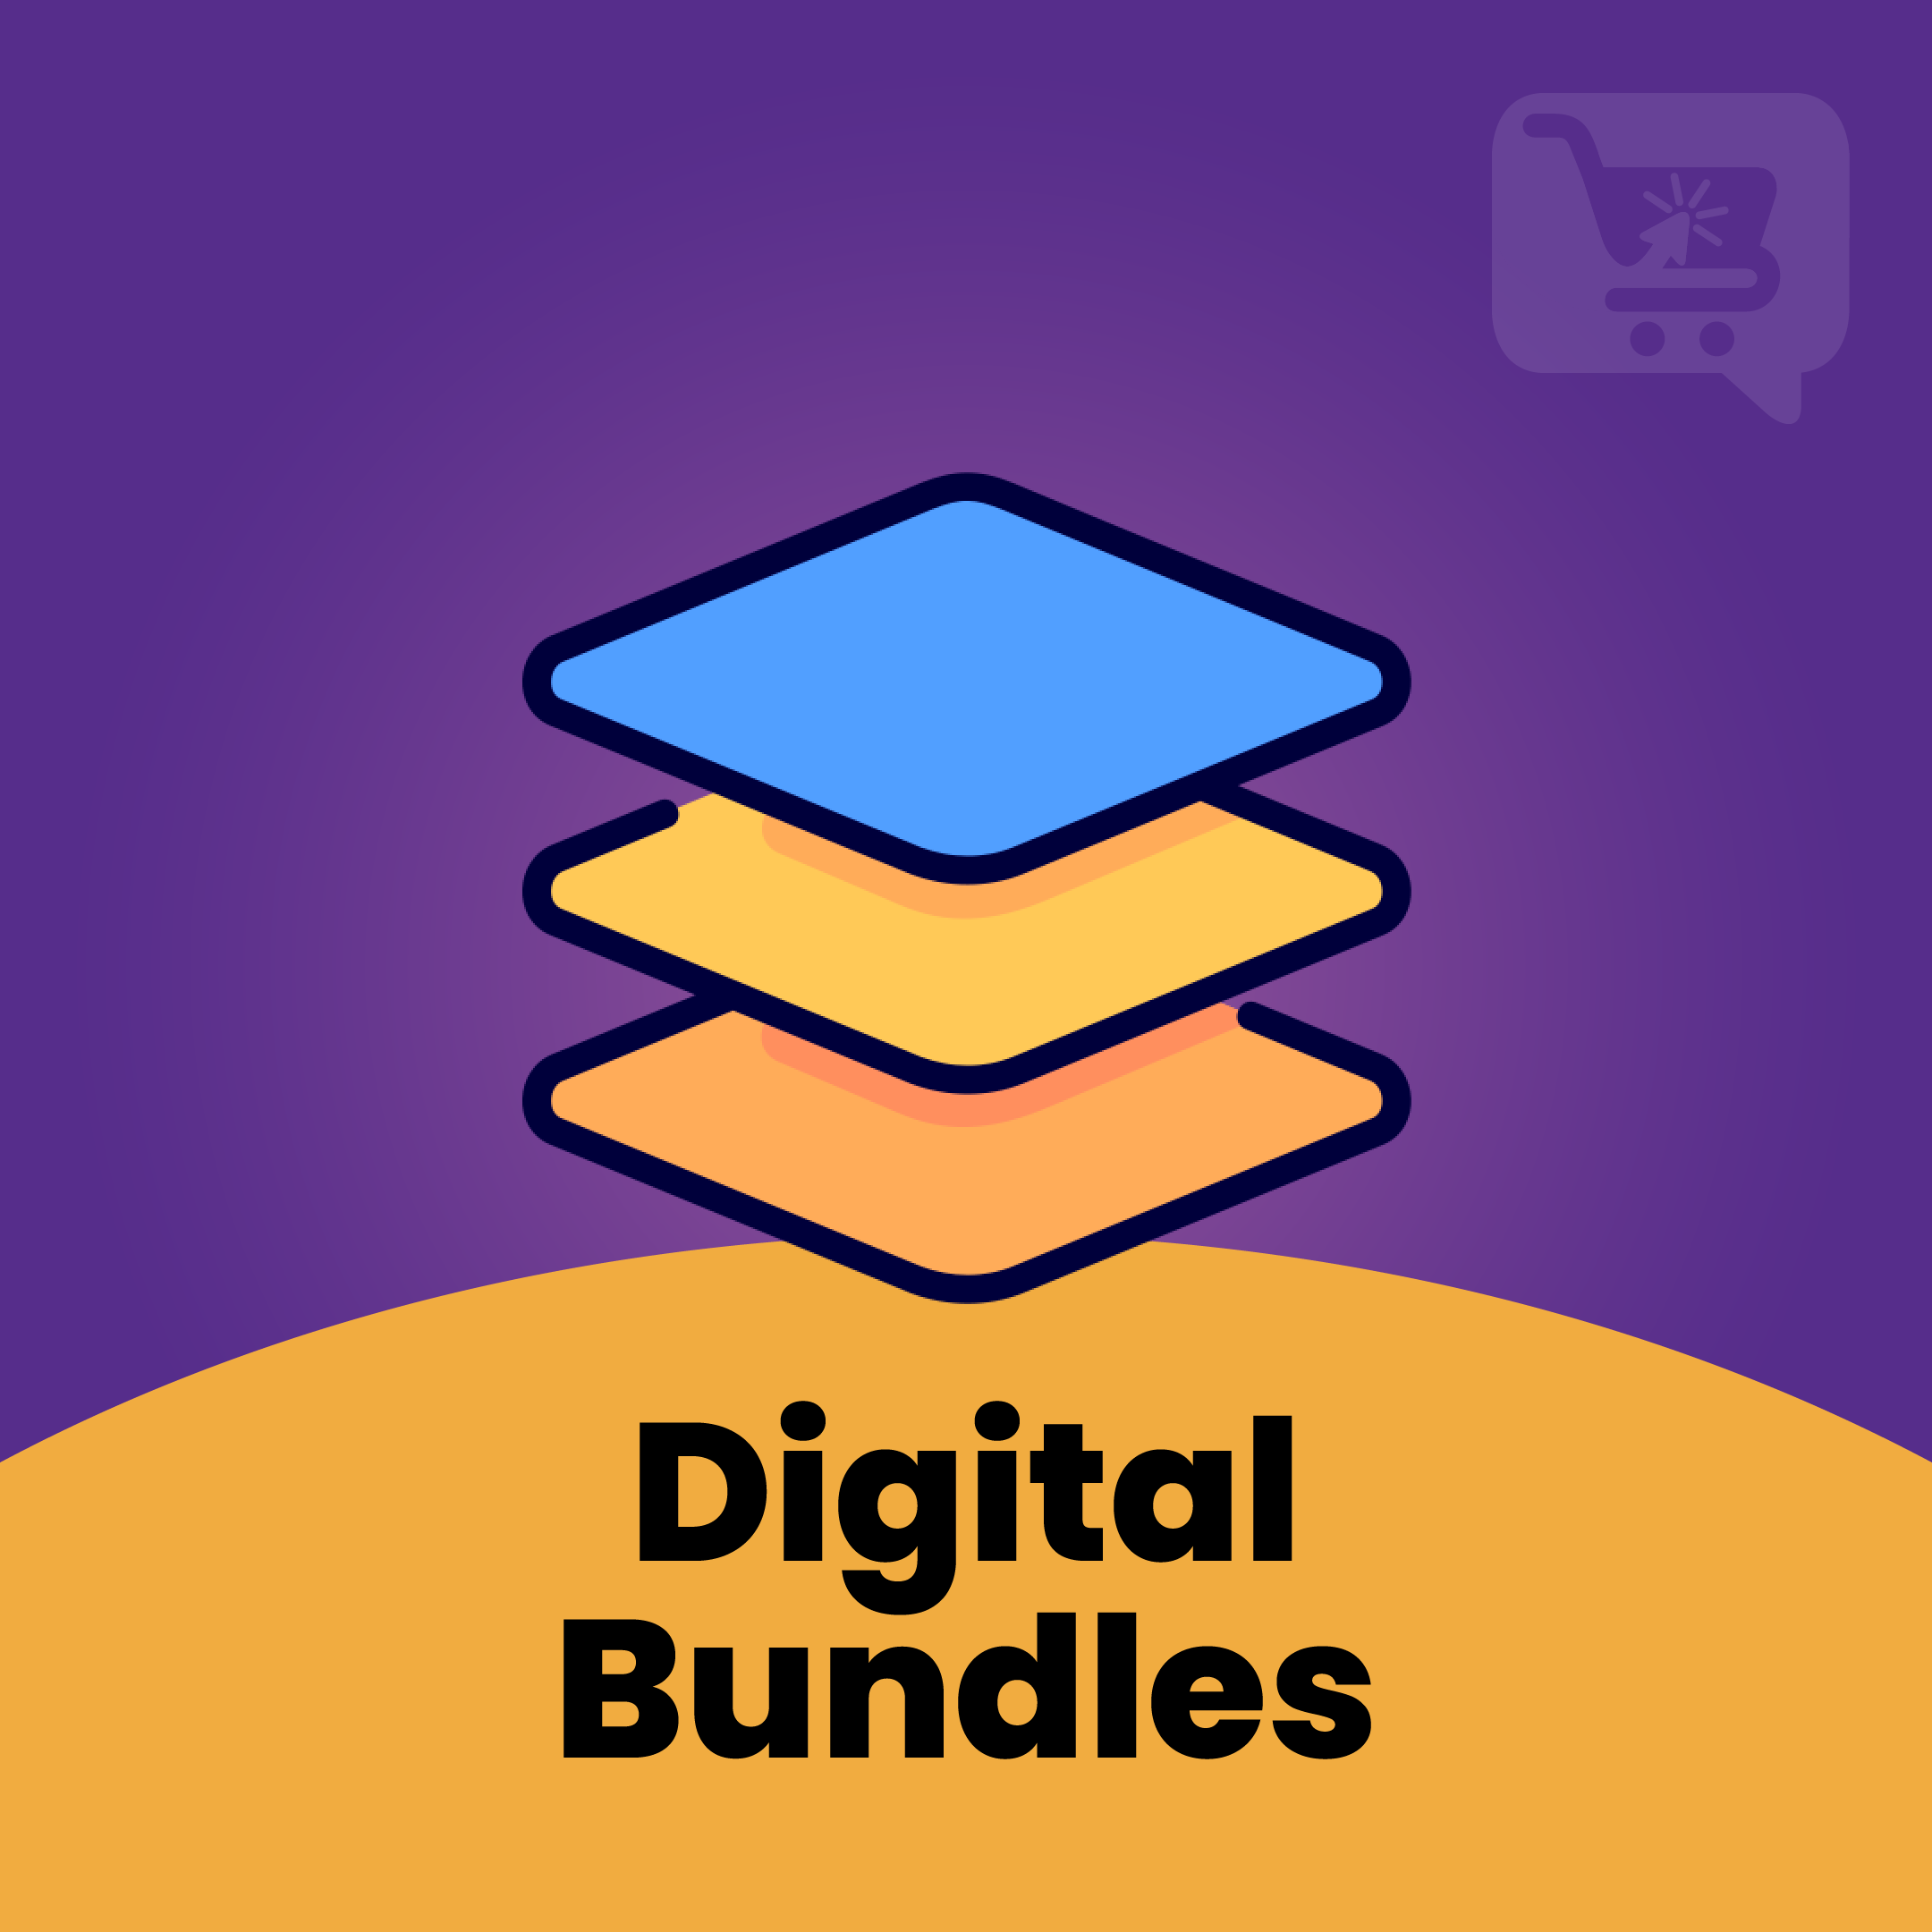 Digital Bundles